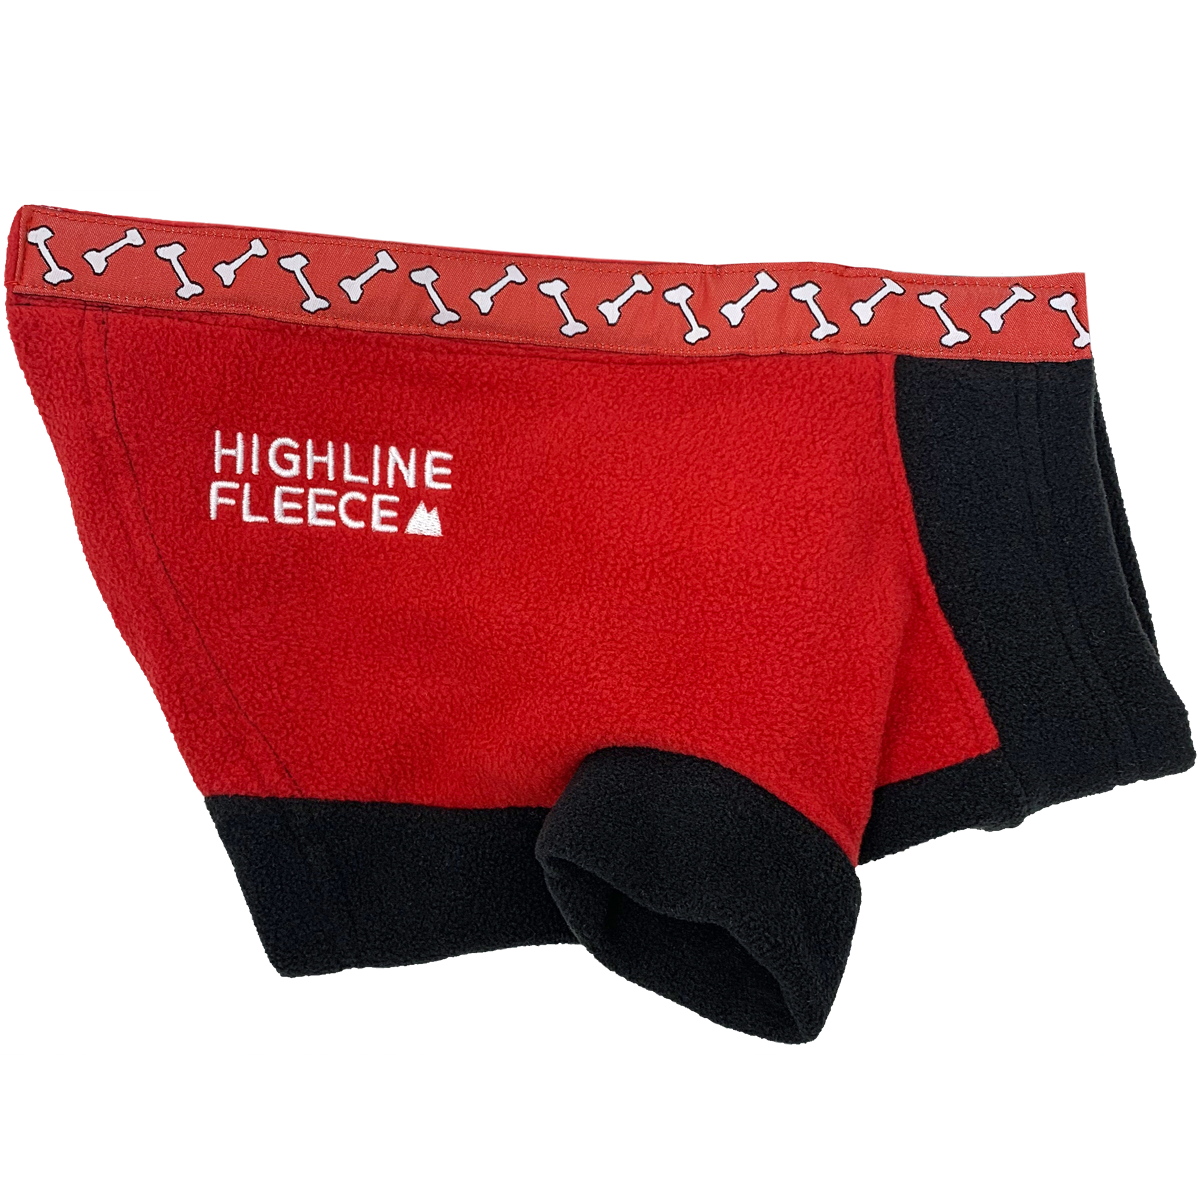 Highline Fleece Dog Coat - Red and Black with Rolling Bones